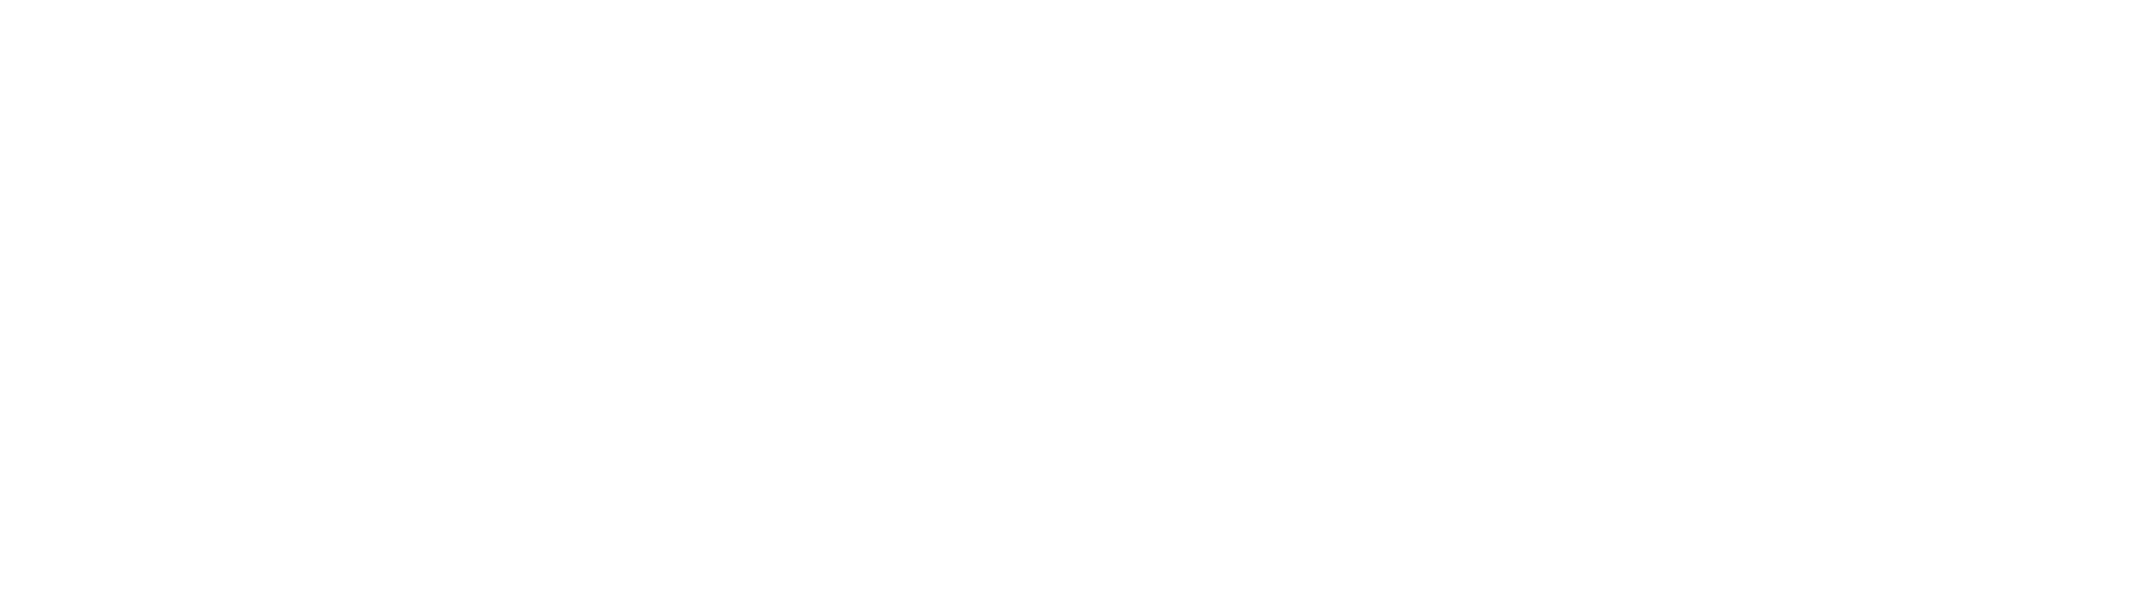 Core Property Consultants Logo - White